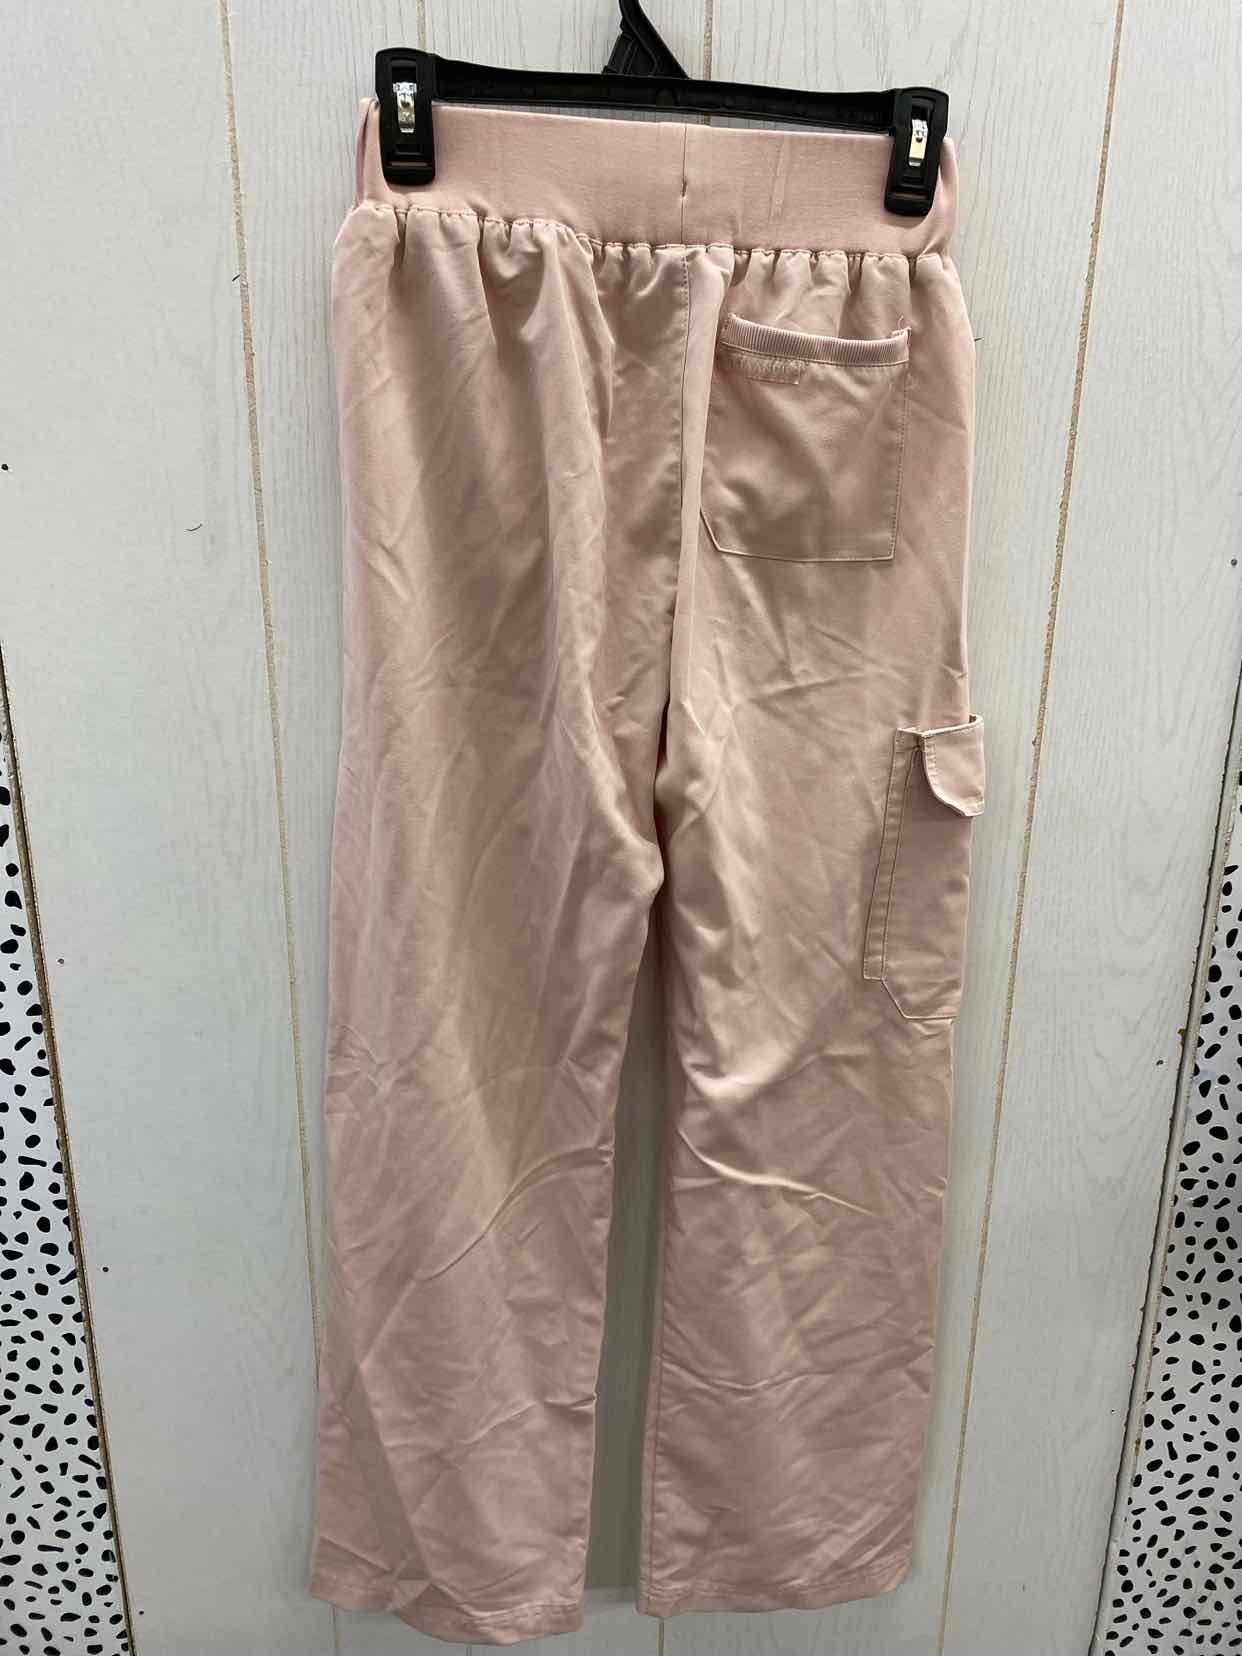 Jaanuu Pink Womens Size Small Scrub Pants